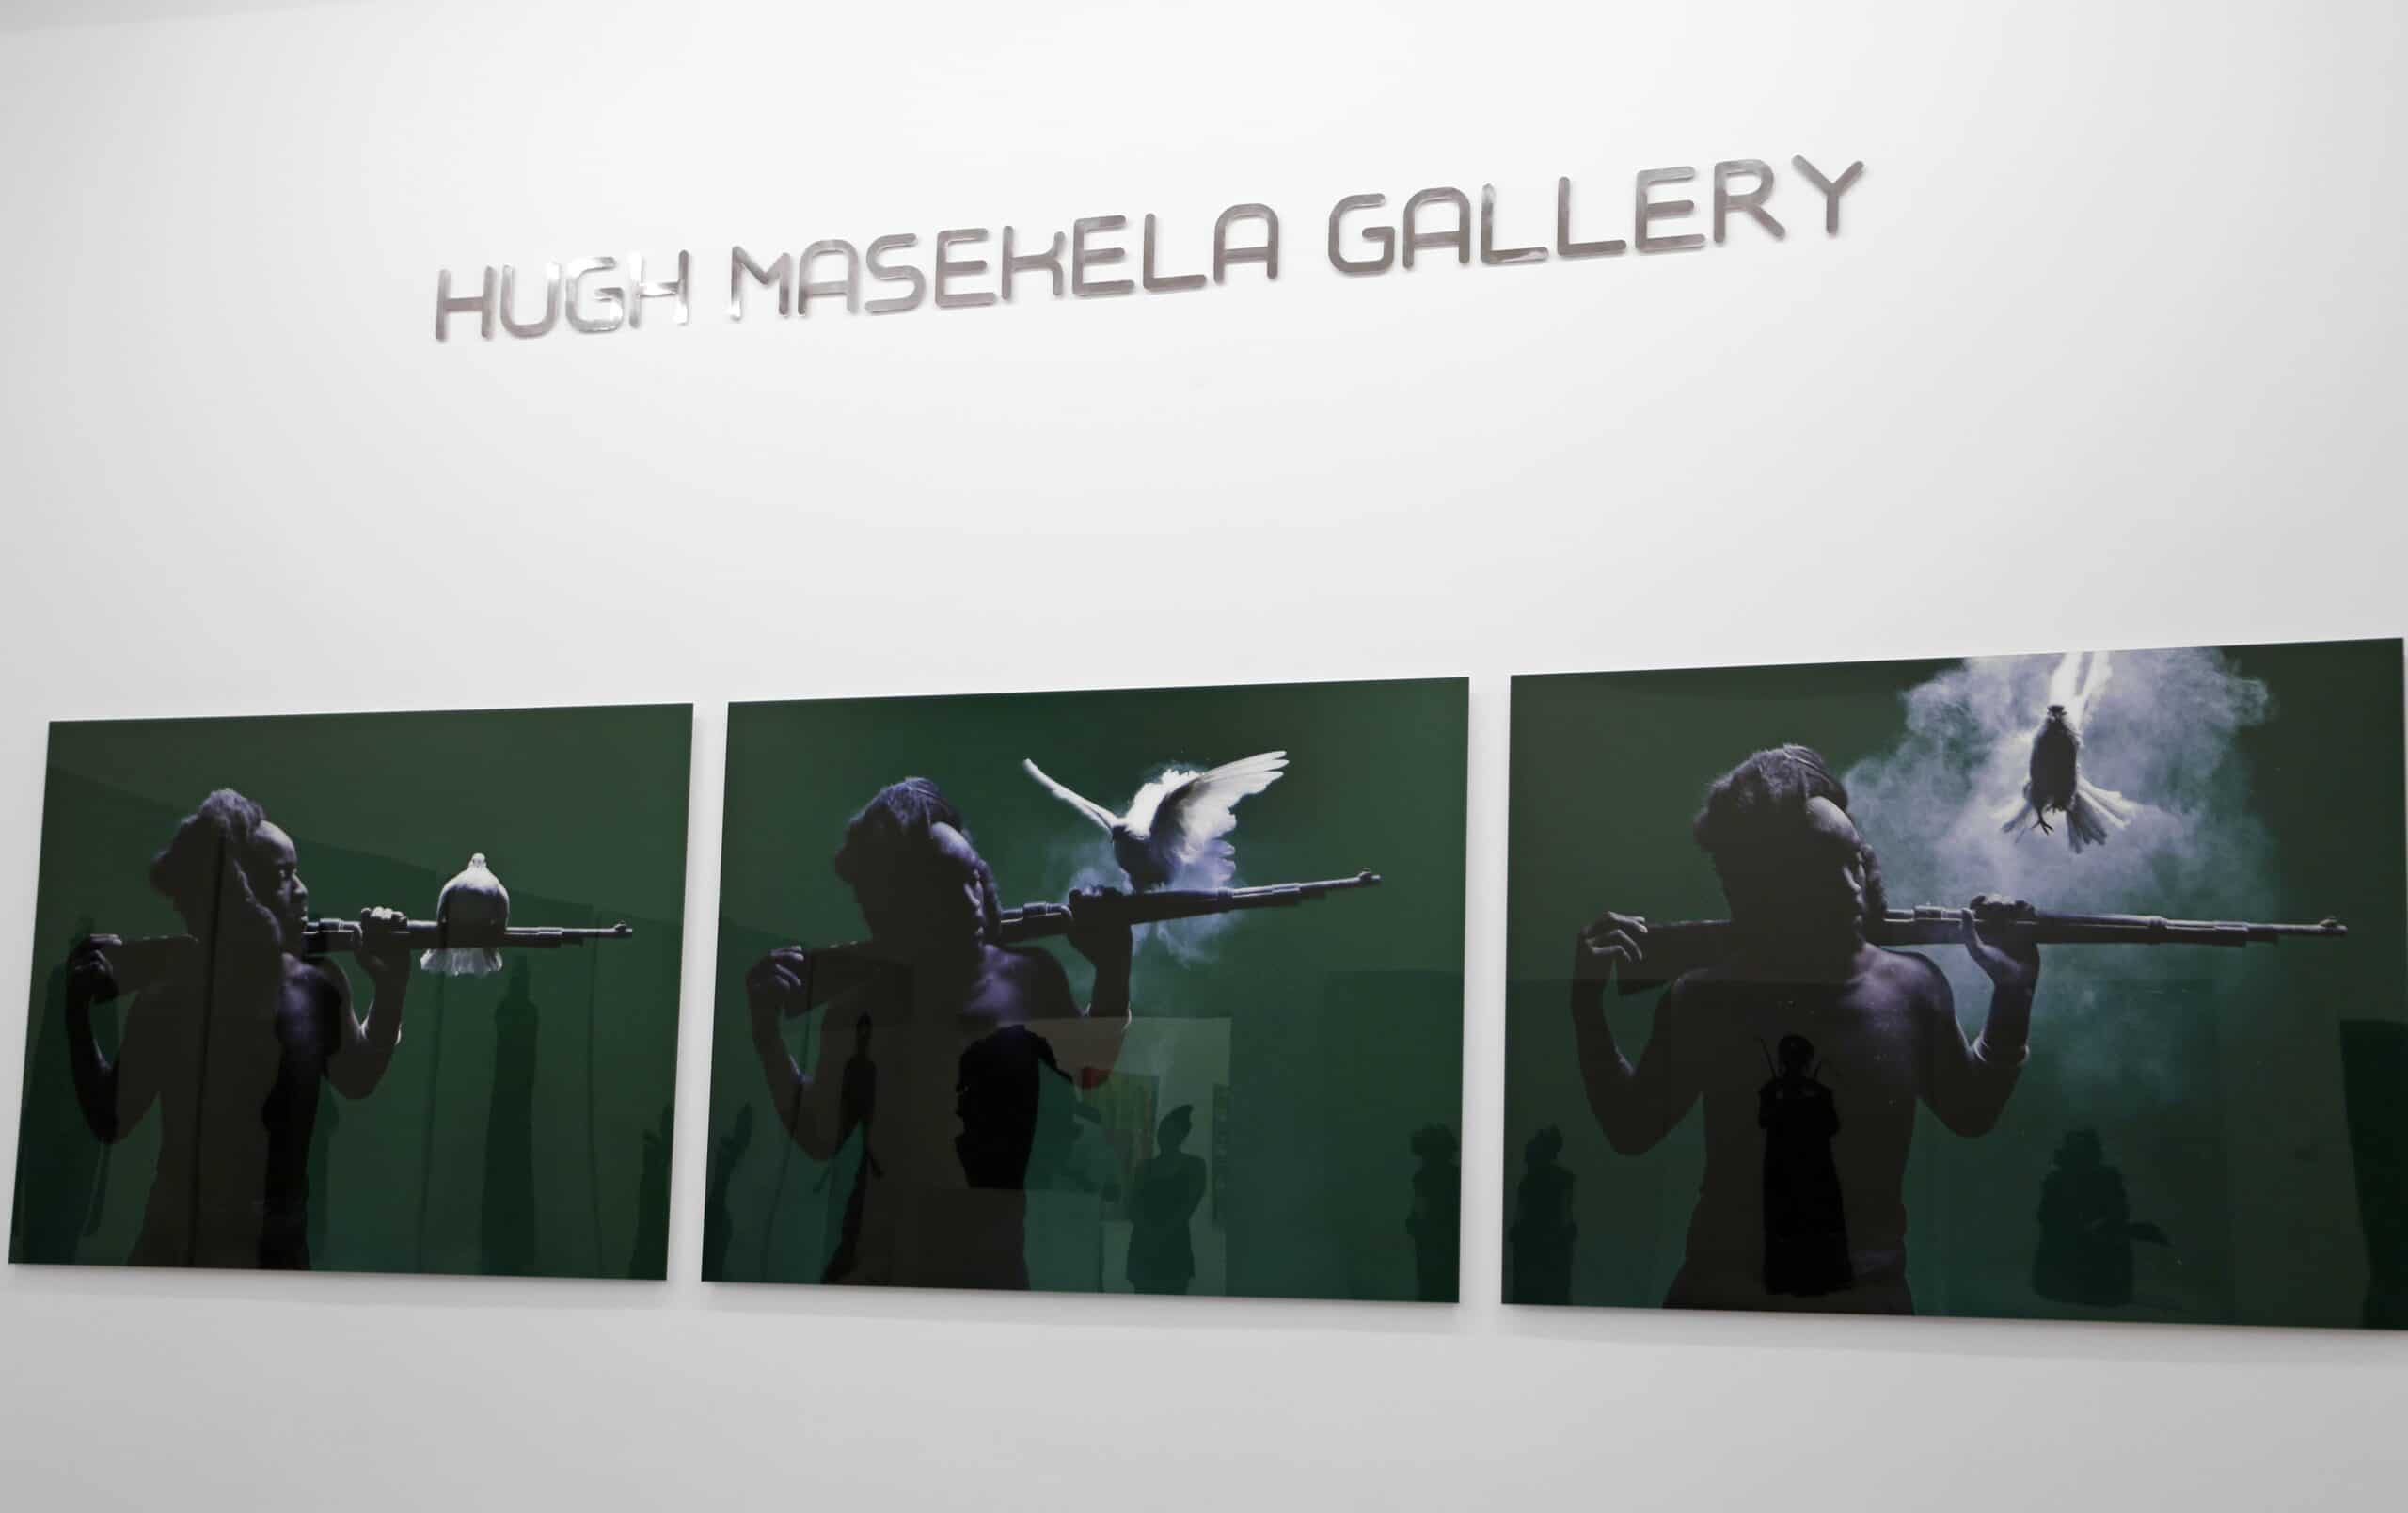 31542018_L02_PC Gallery 15_Hugh Masekela Gallery unveiling_009